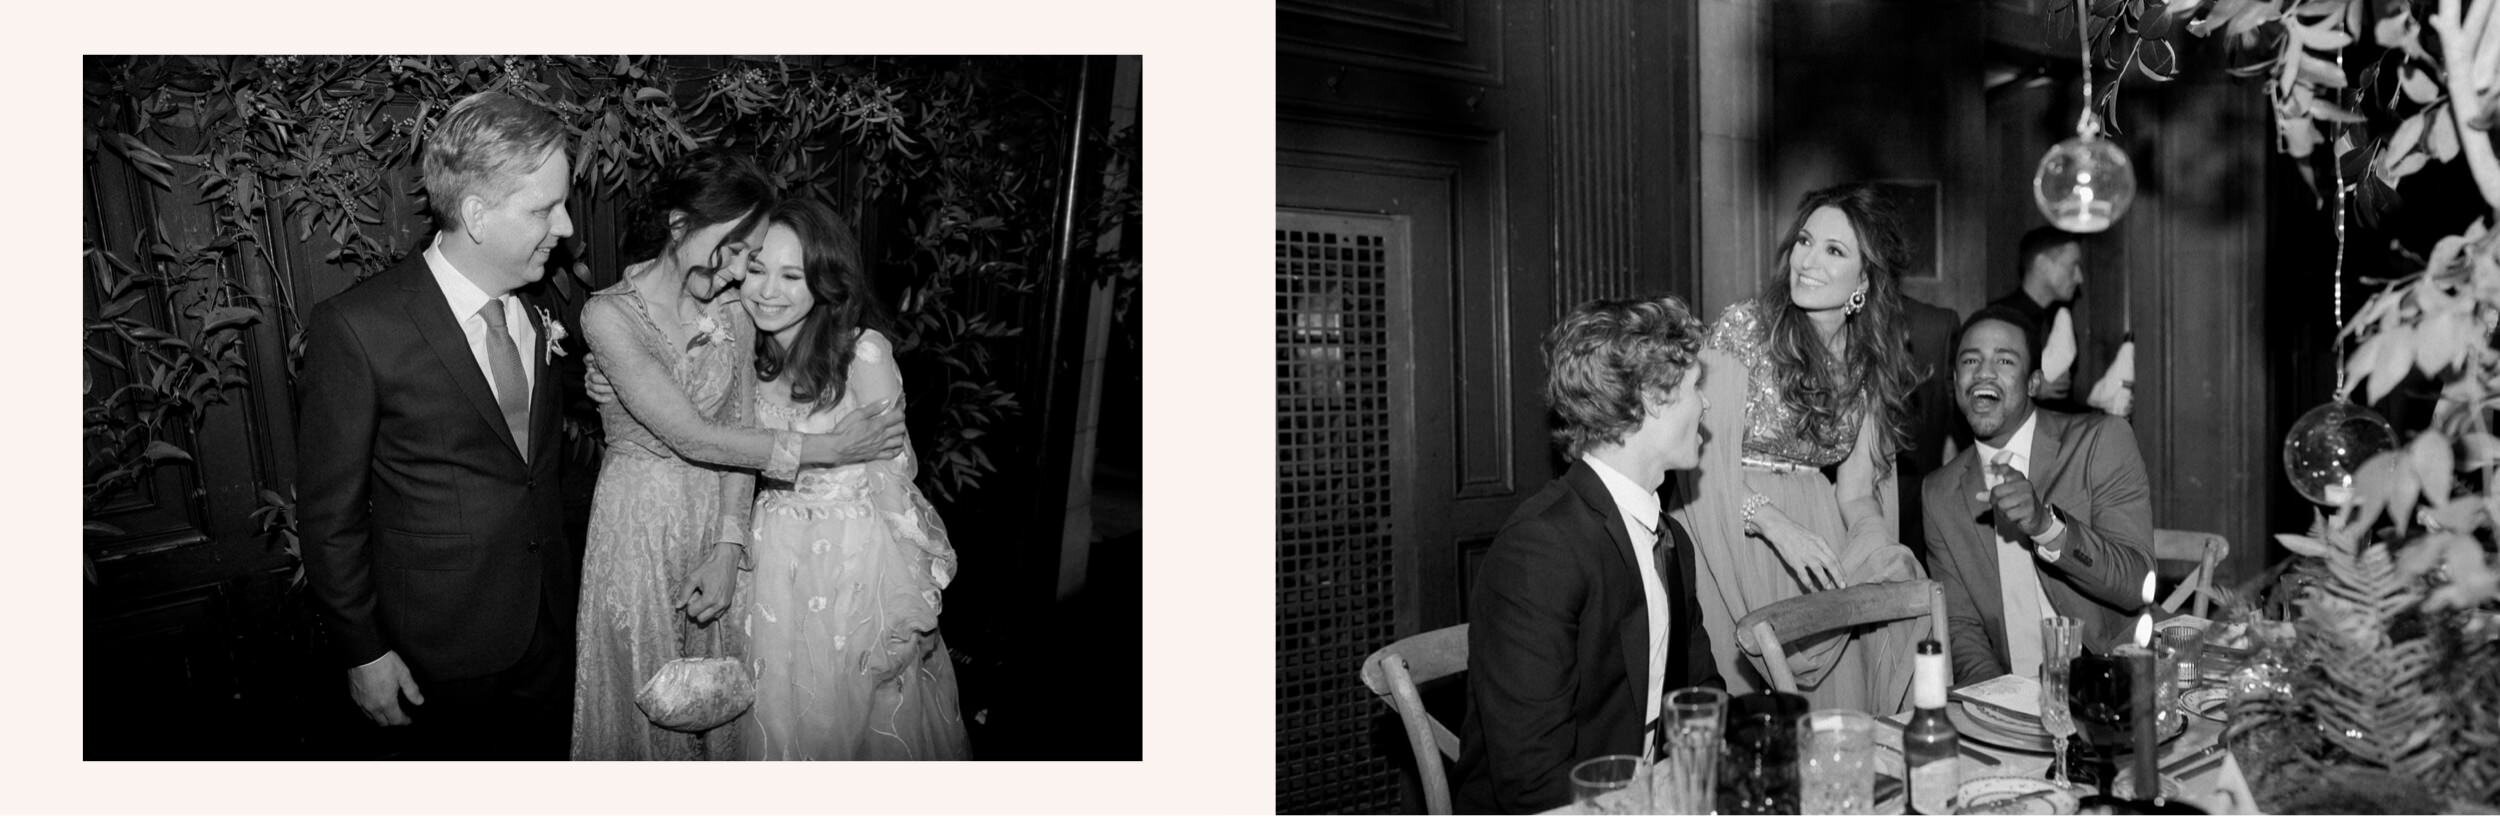 High Line Hotel Wedding - Echoes & Wild Hearts 0037.jpg